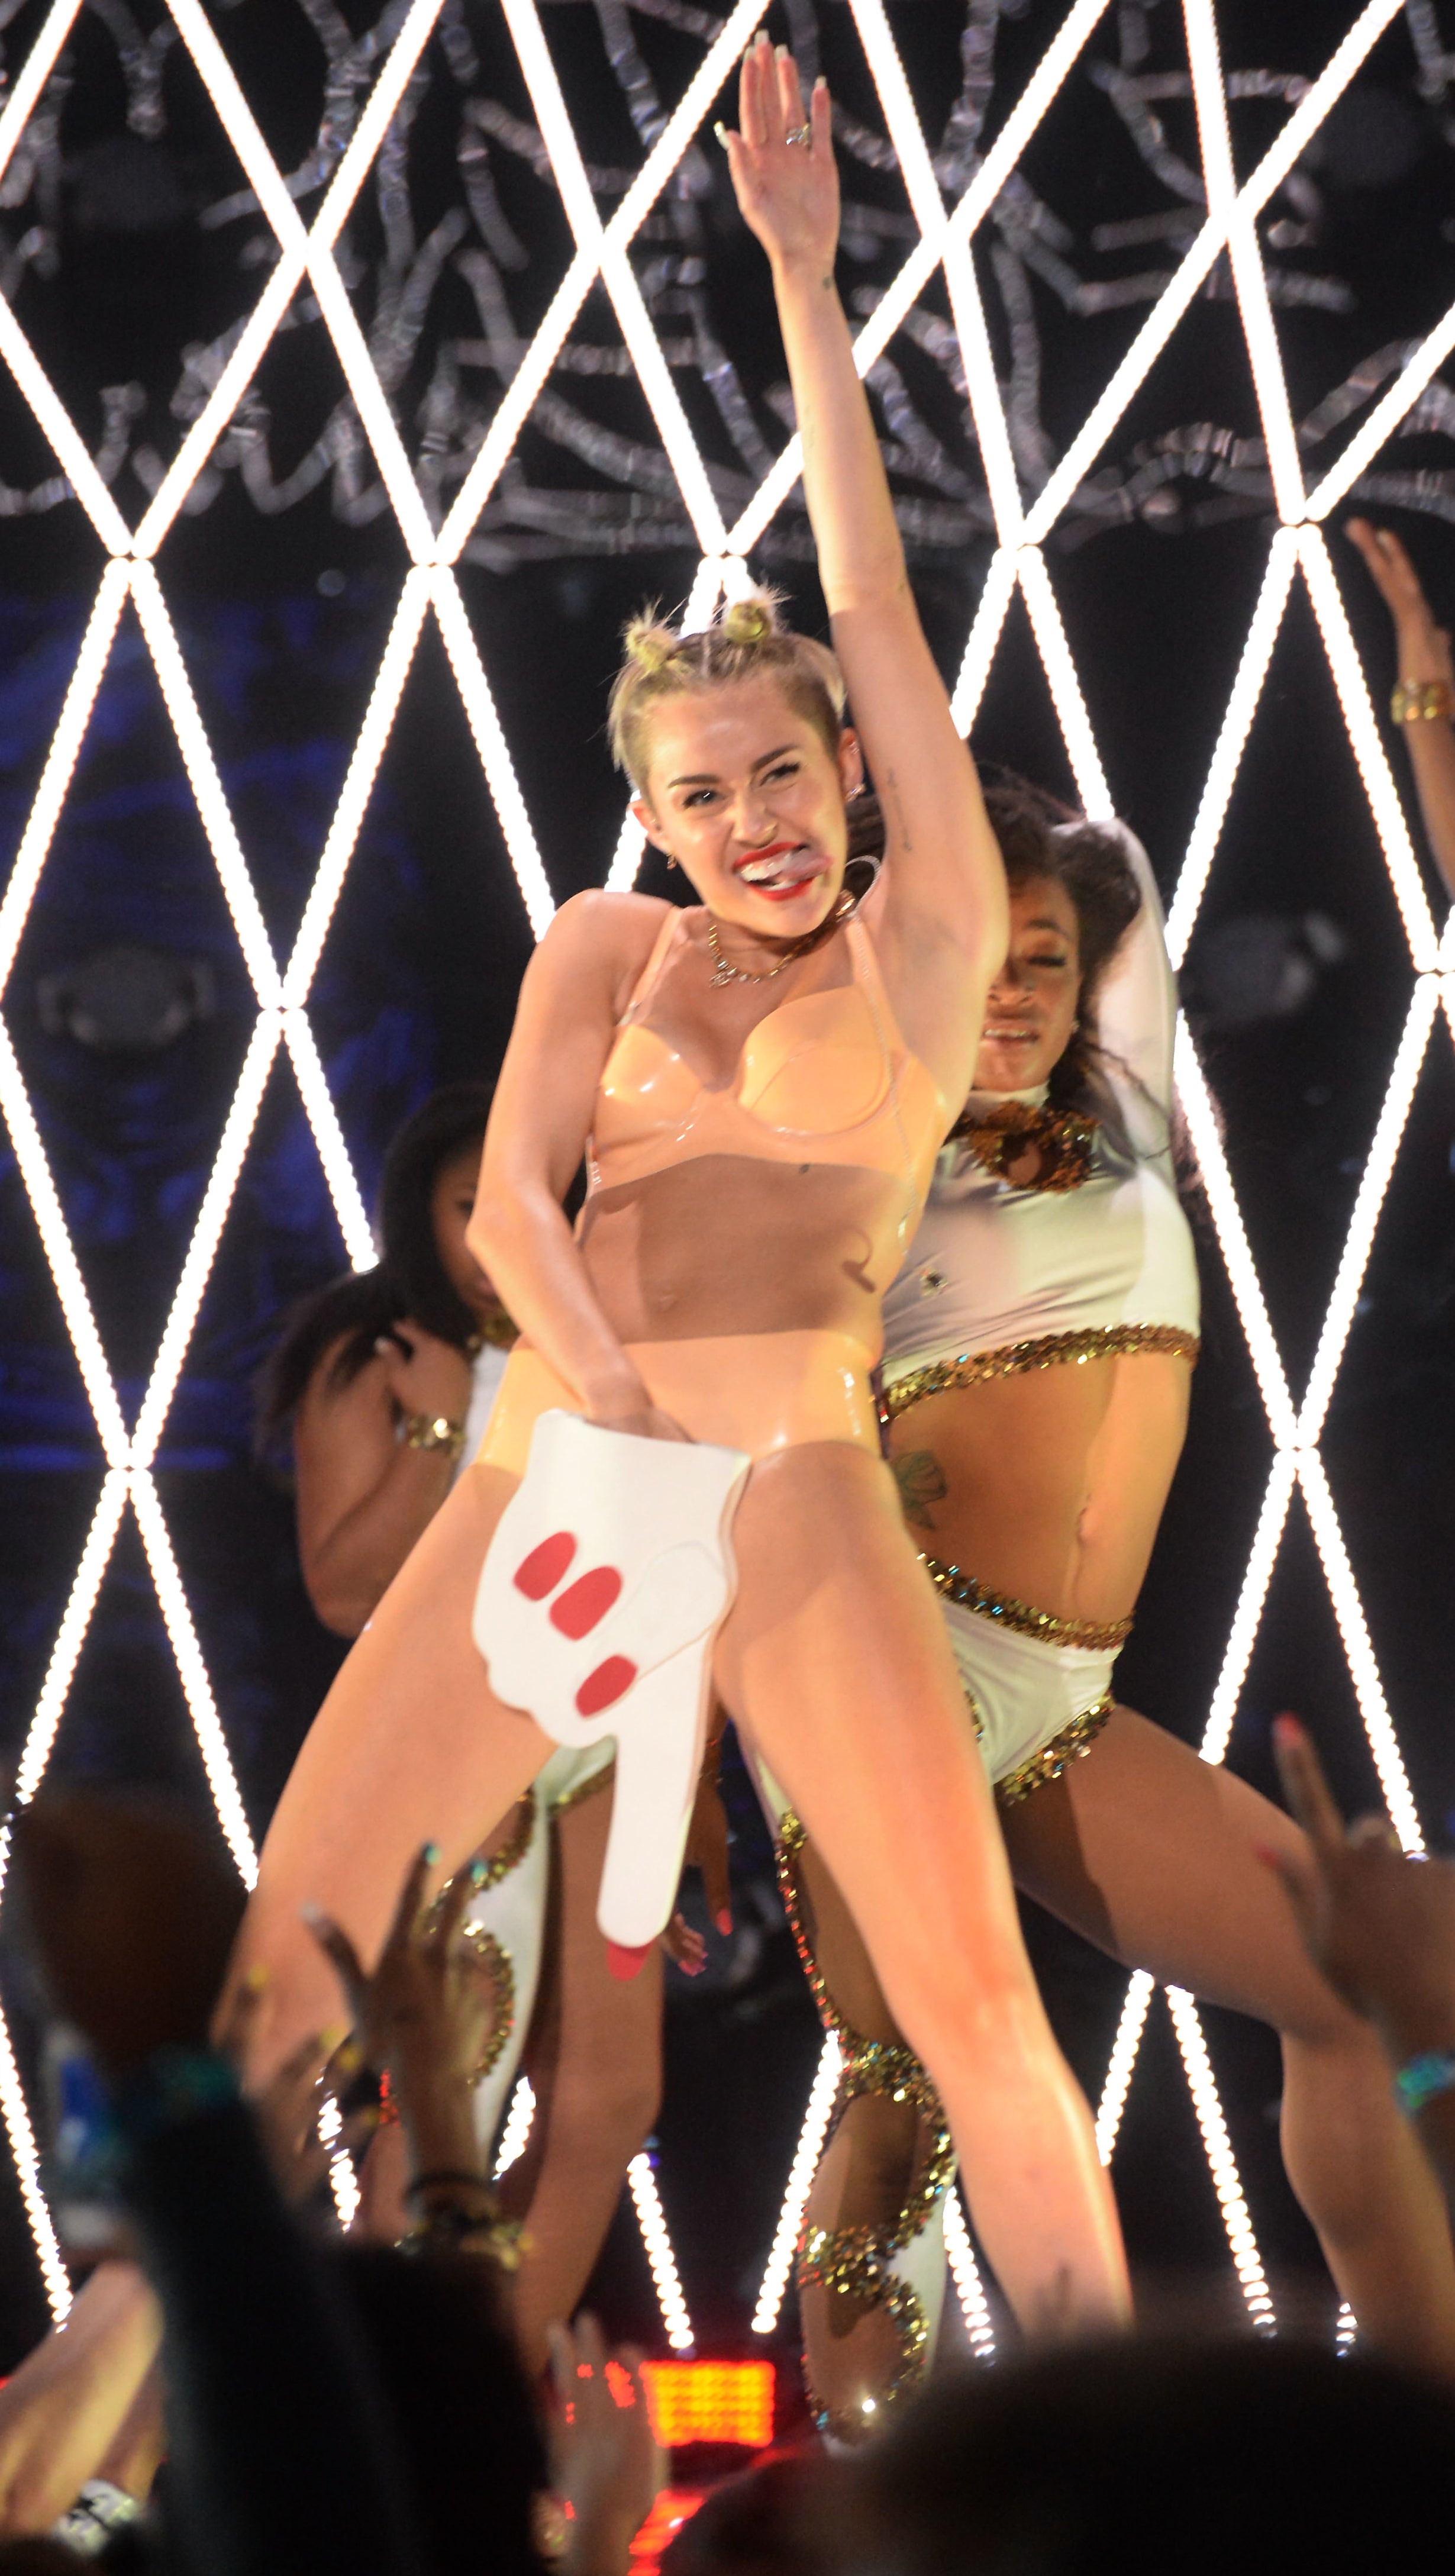 Miley dancing onstage